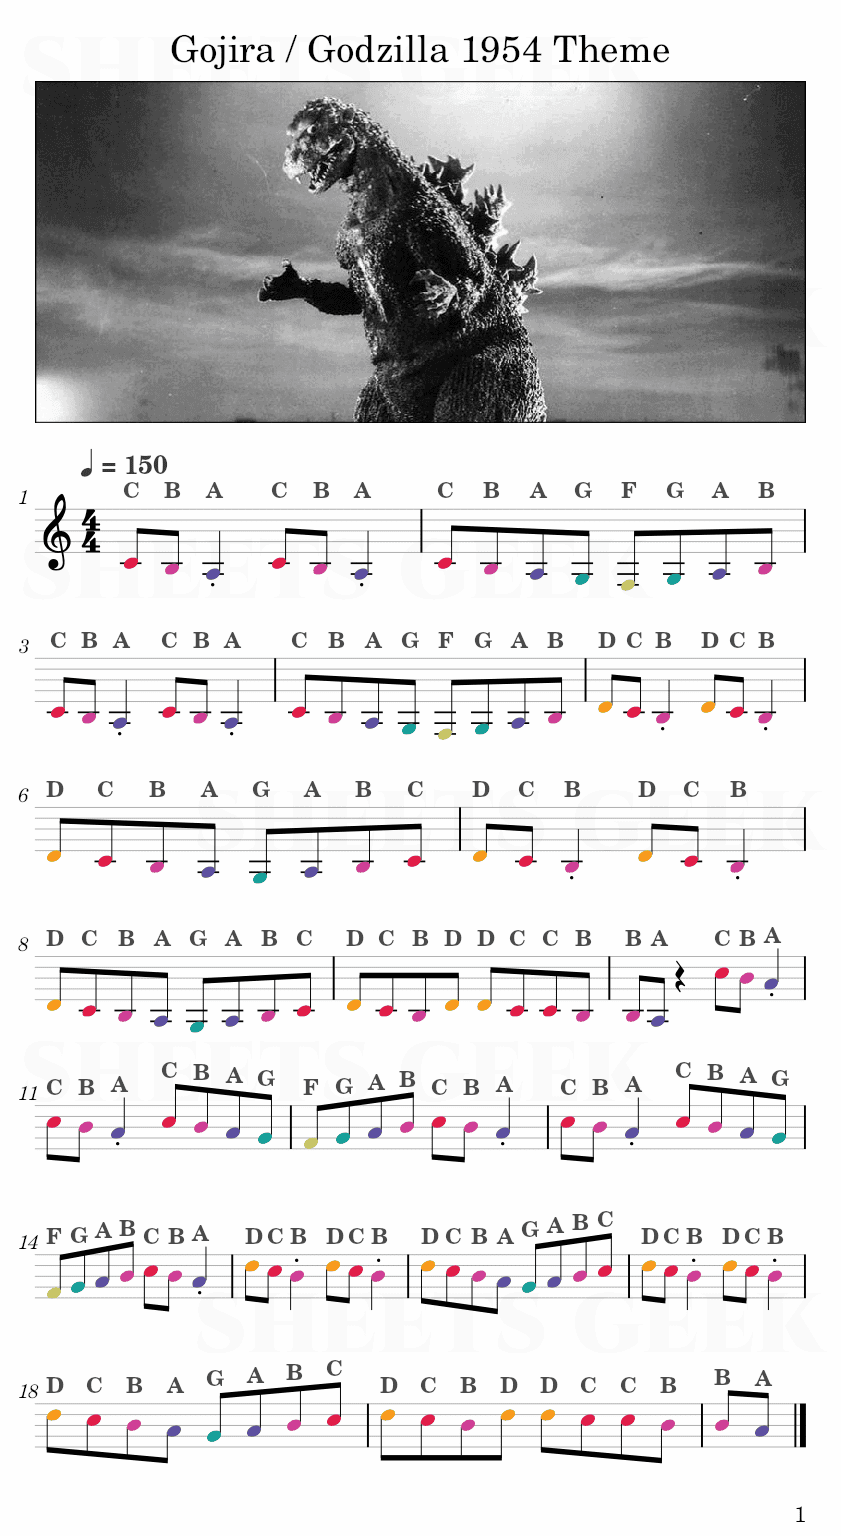 Gojira / Godzilla 1954 Theme Easy Sheet Music Free for piano, keyboard, flute, violin, sax, cello page 1